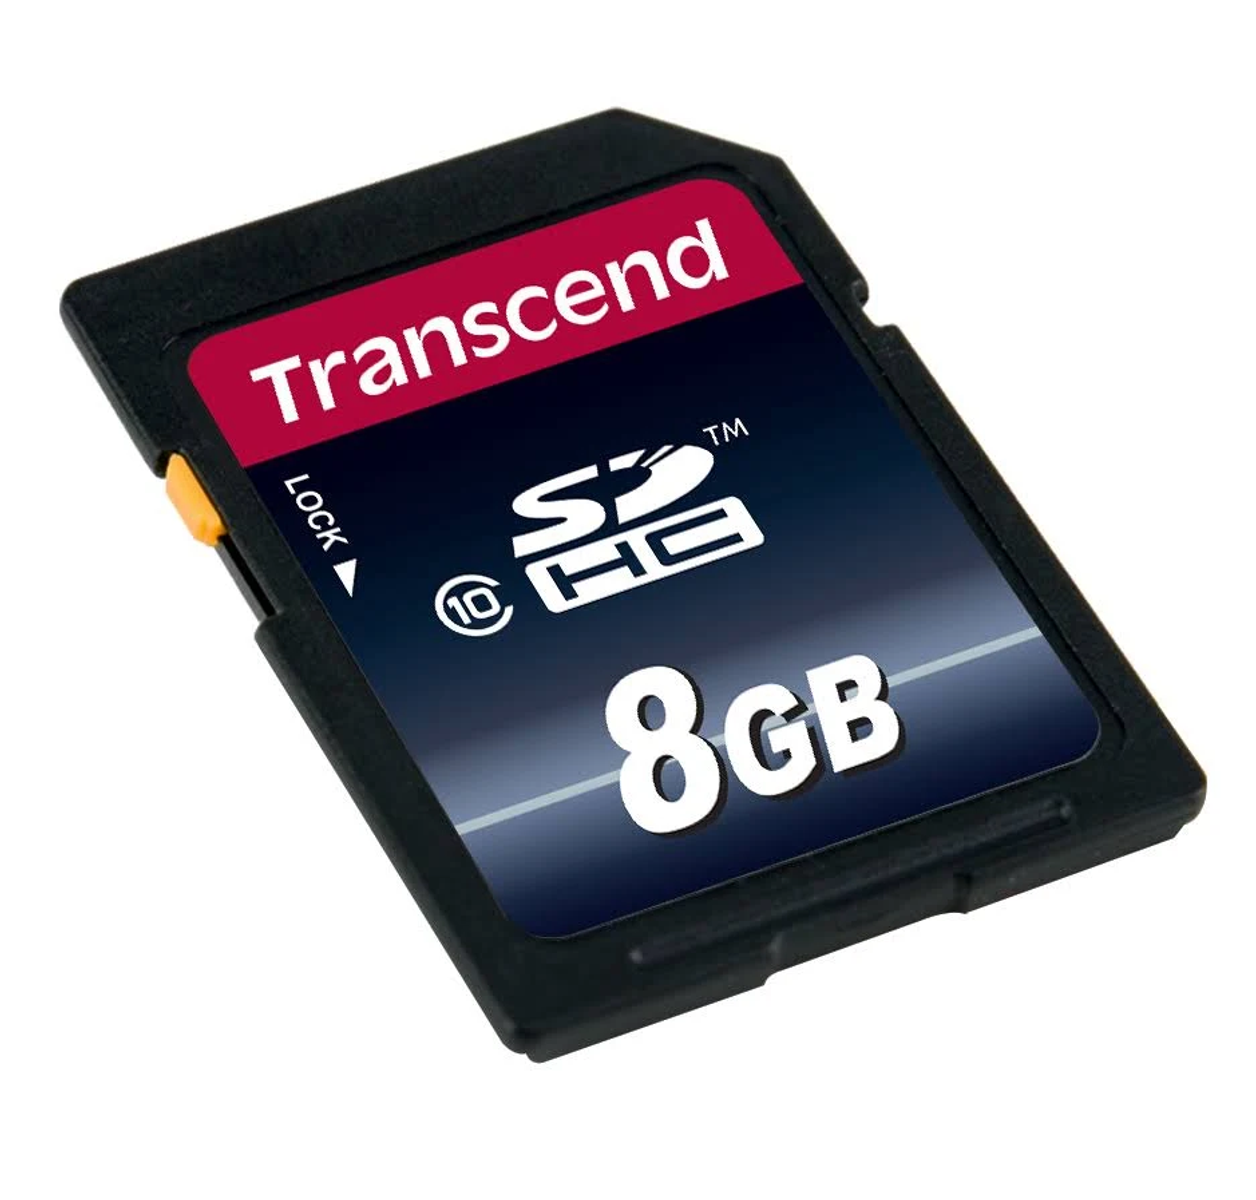 TRANSCEND m0000B2L7Y, Micro-SDHC, SDHC, MB/s GB, SD 19 8 Speicherkarte